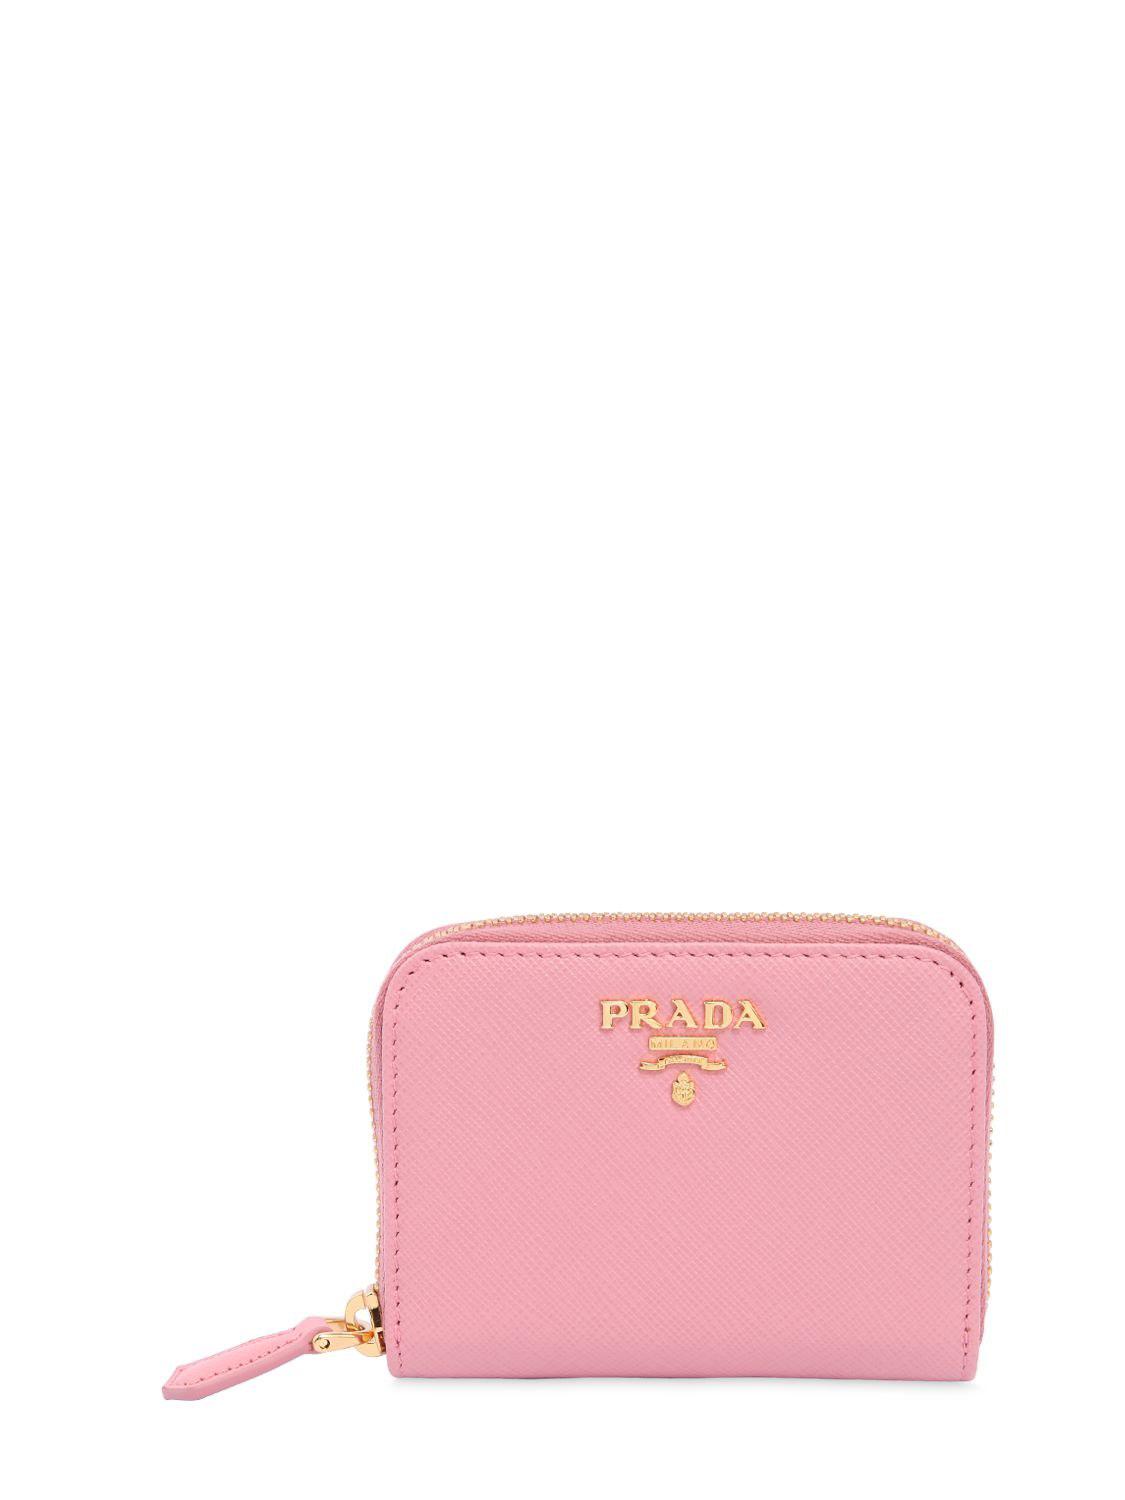 Prada Zipper Coin Saffiano Wallet Pink